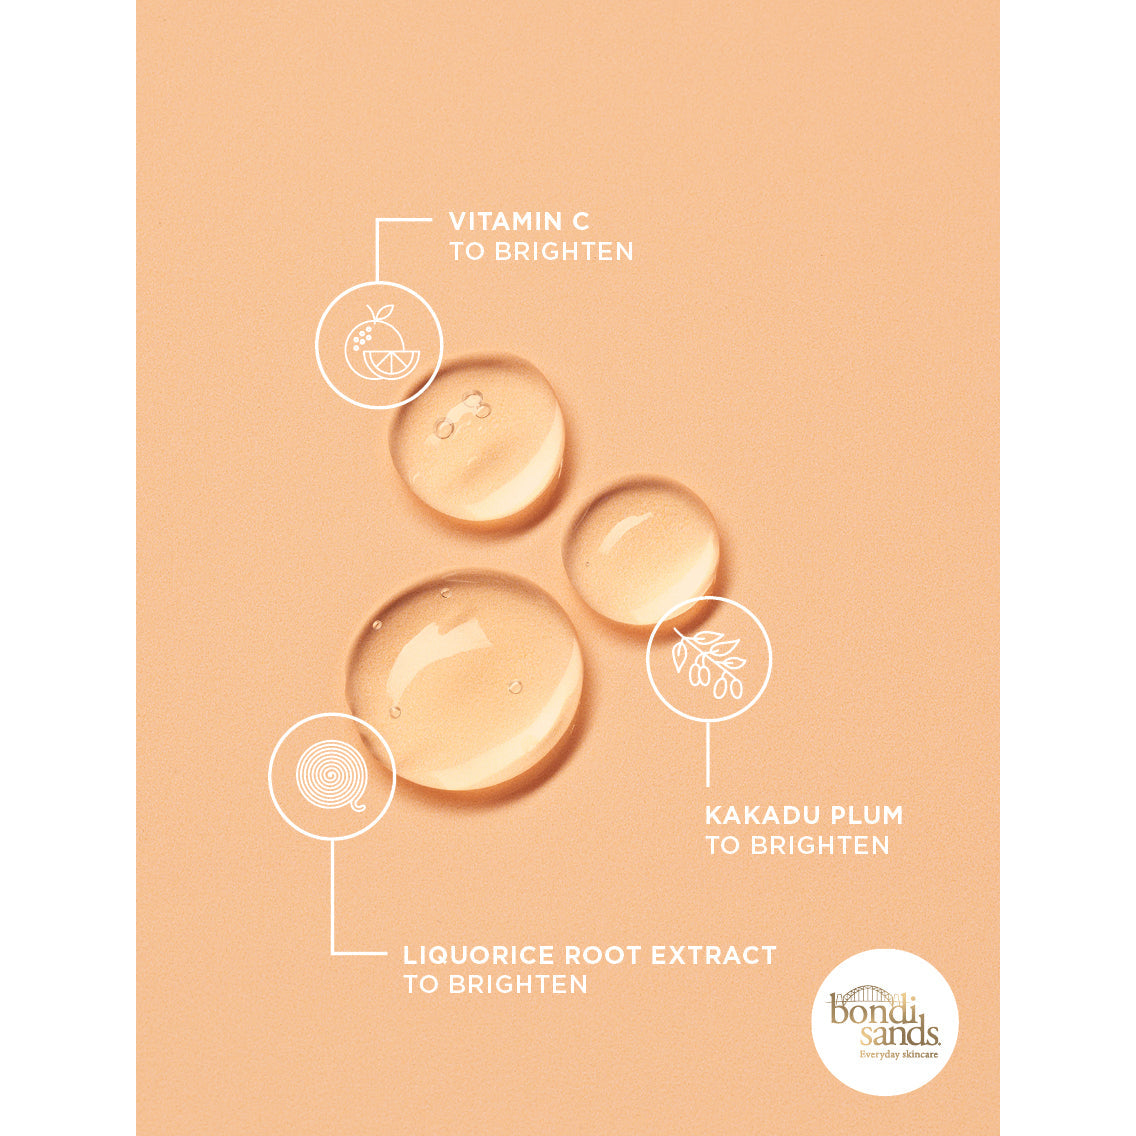 Bondi Sands Gold'n Hour Vitamin C Serum (30ml) key ingredients